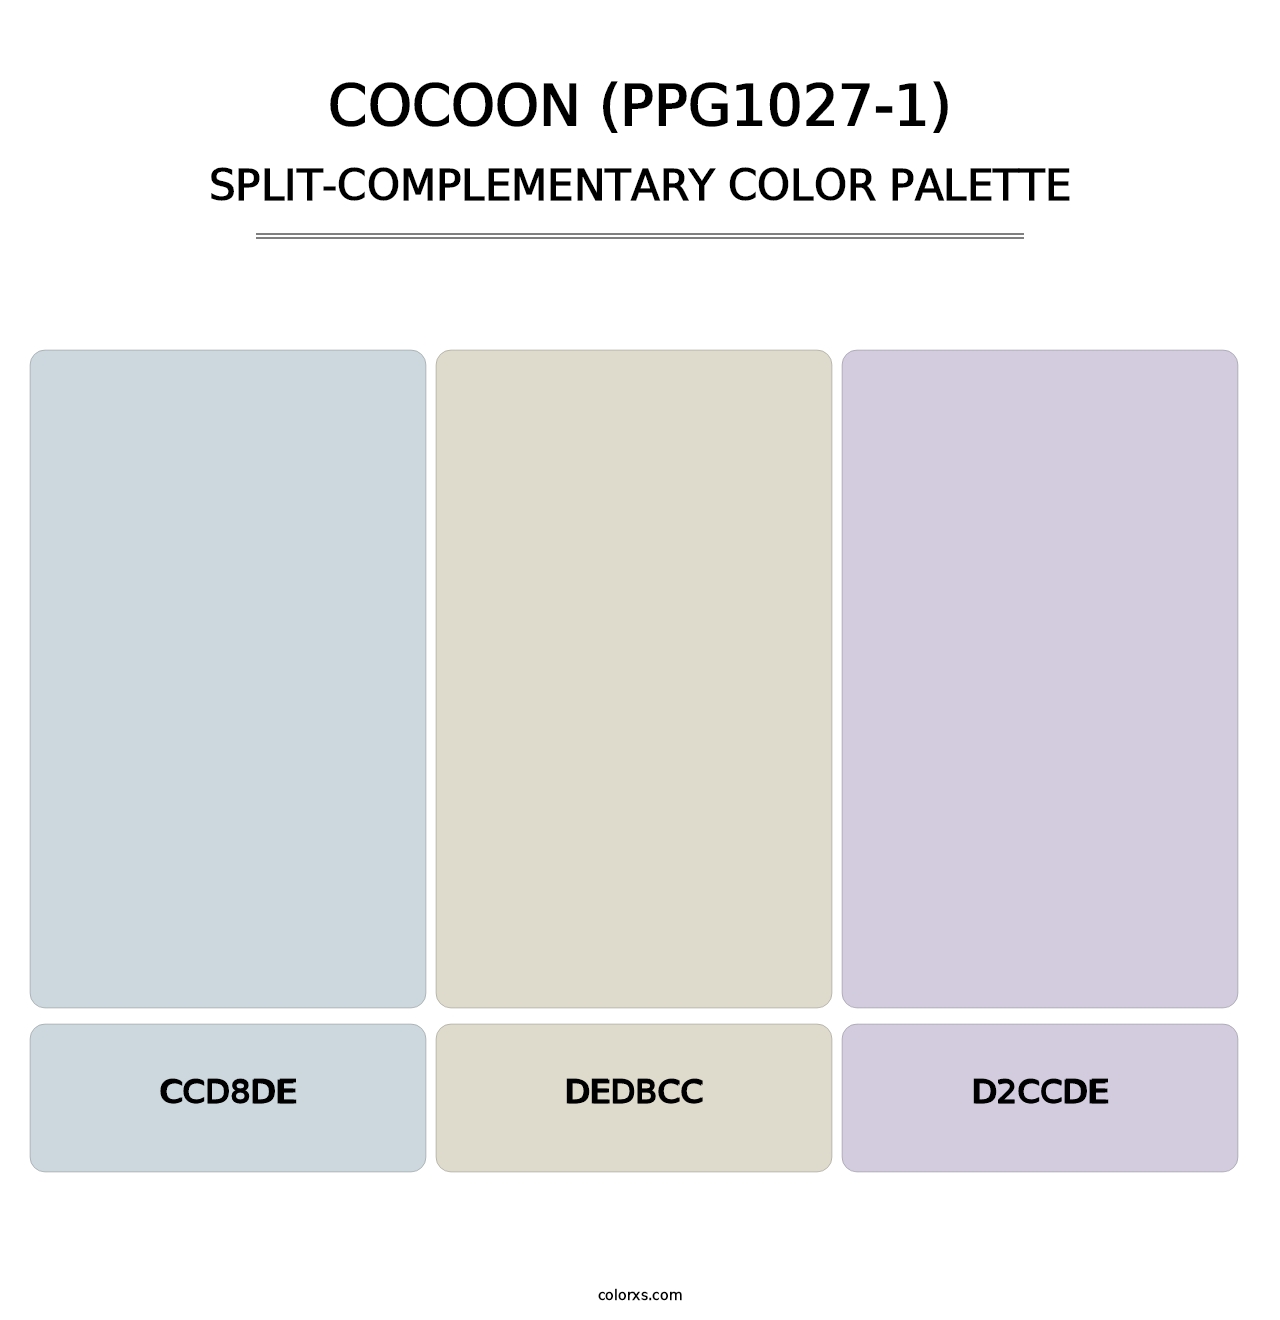 Cocoon (PPG1027-1) - Split-Complementary Color Palette